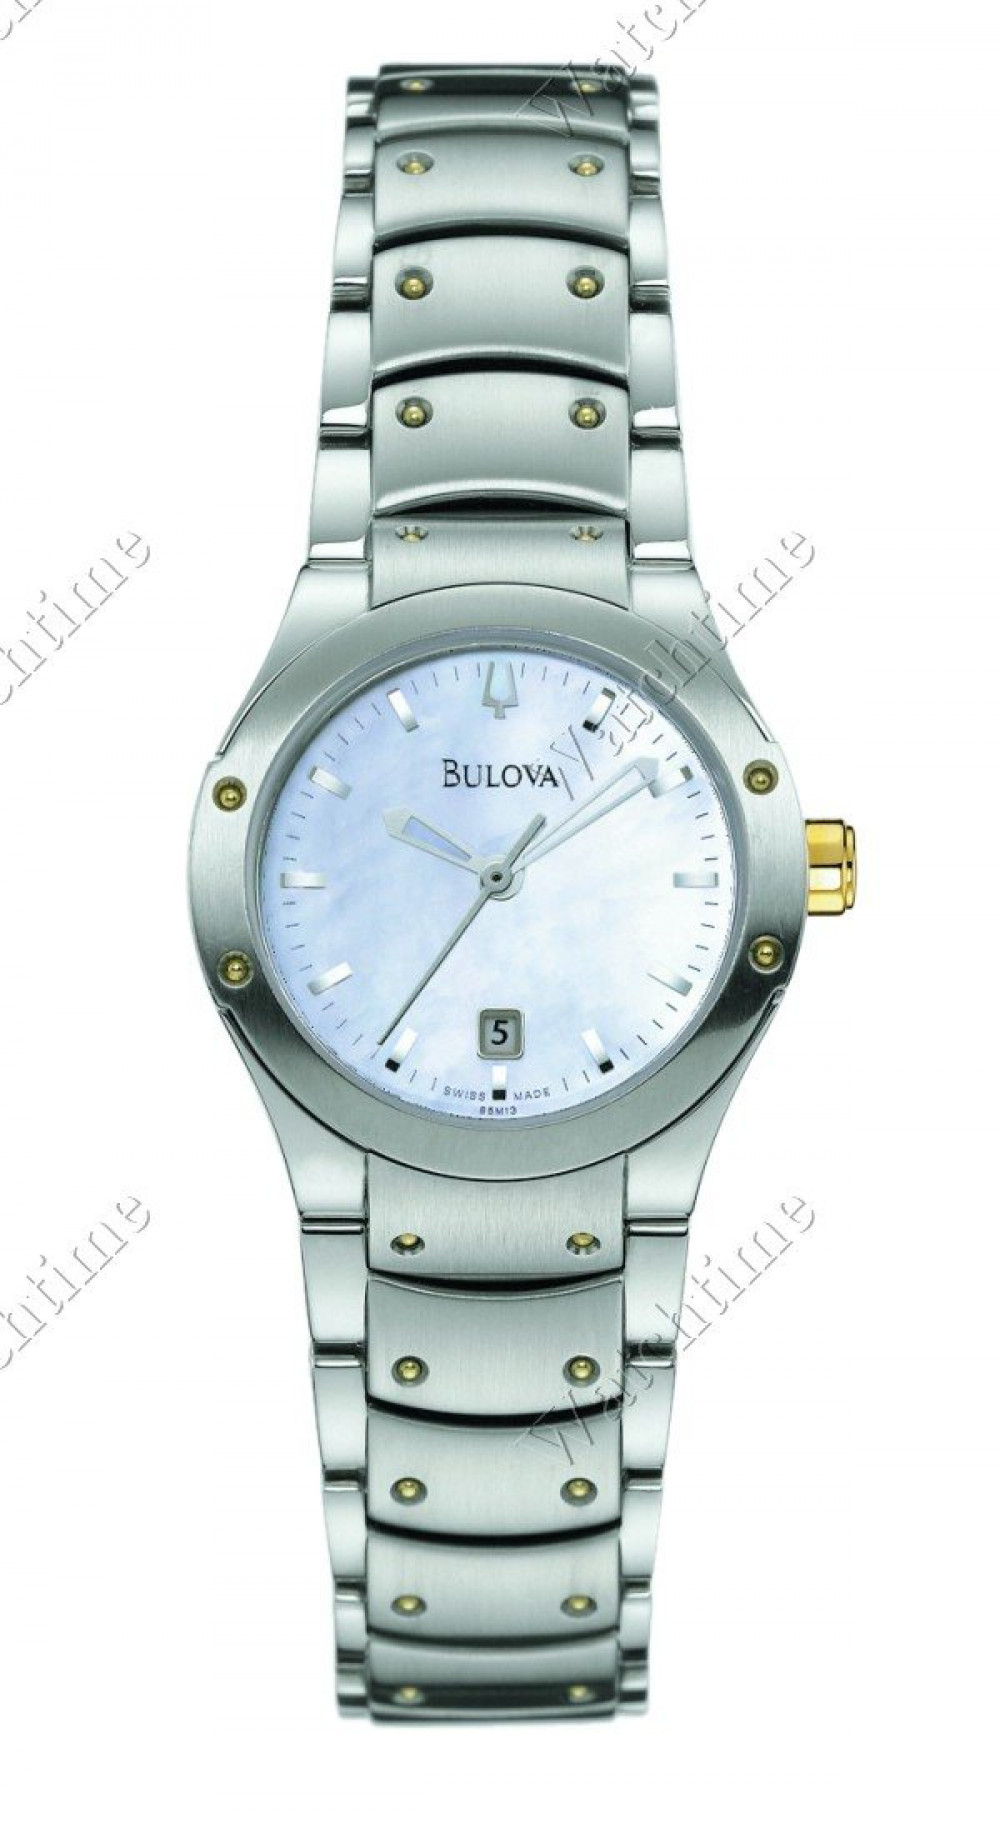 Zegarek firmy Bulova, model 